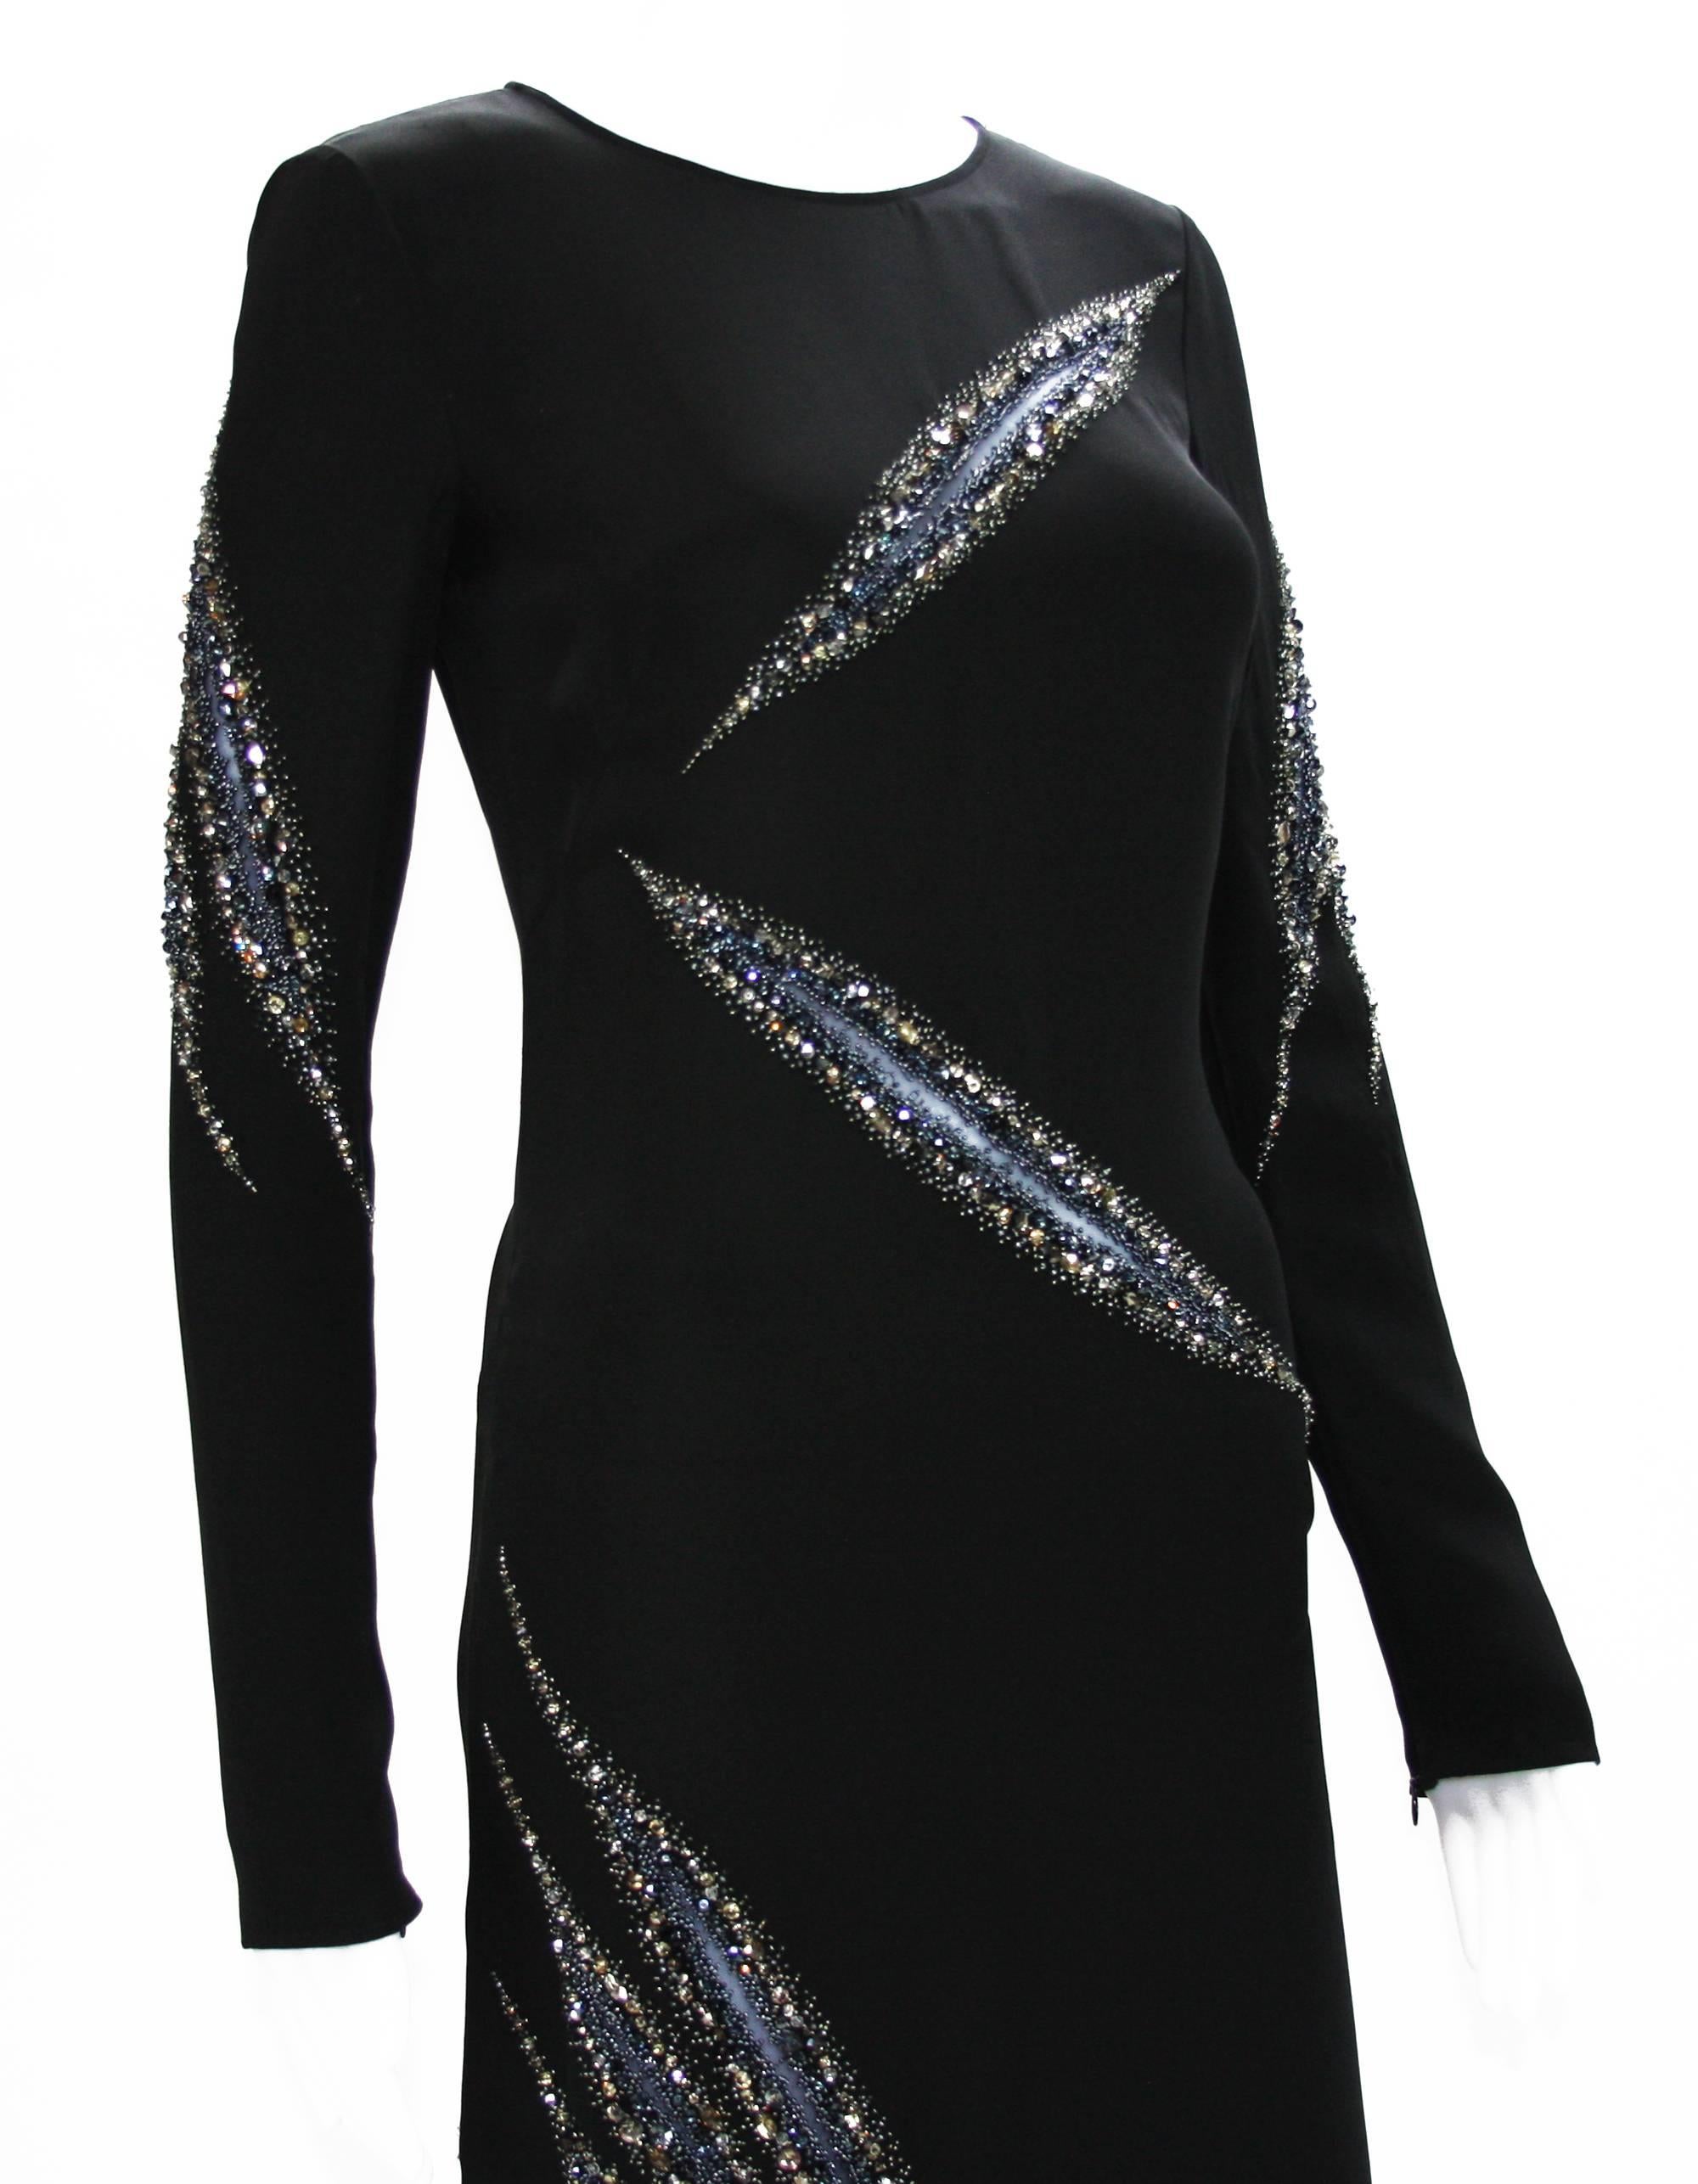 Emilio Pucci Embellished Gown Eva Longoria Wore to the ALMA Awards It 38 US 4 4